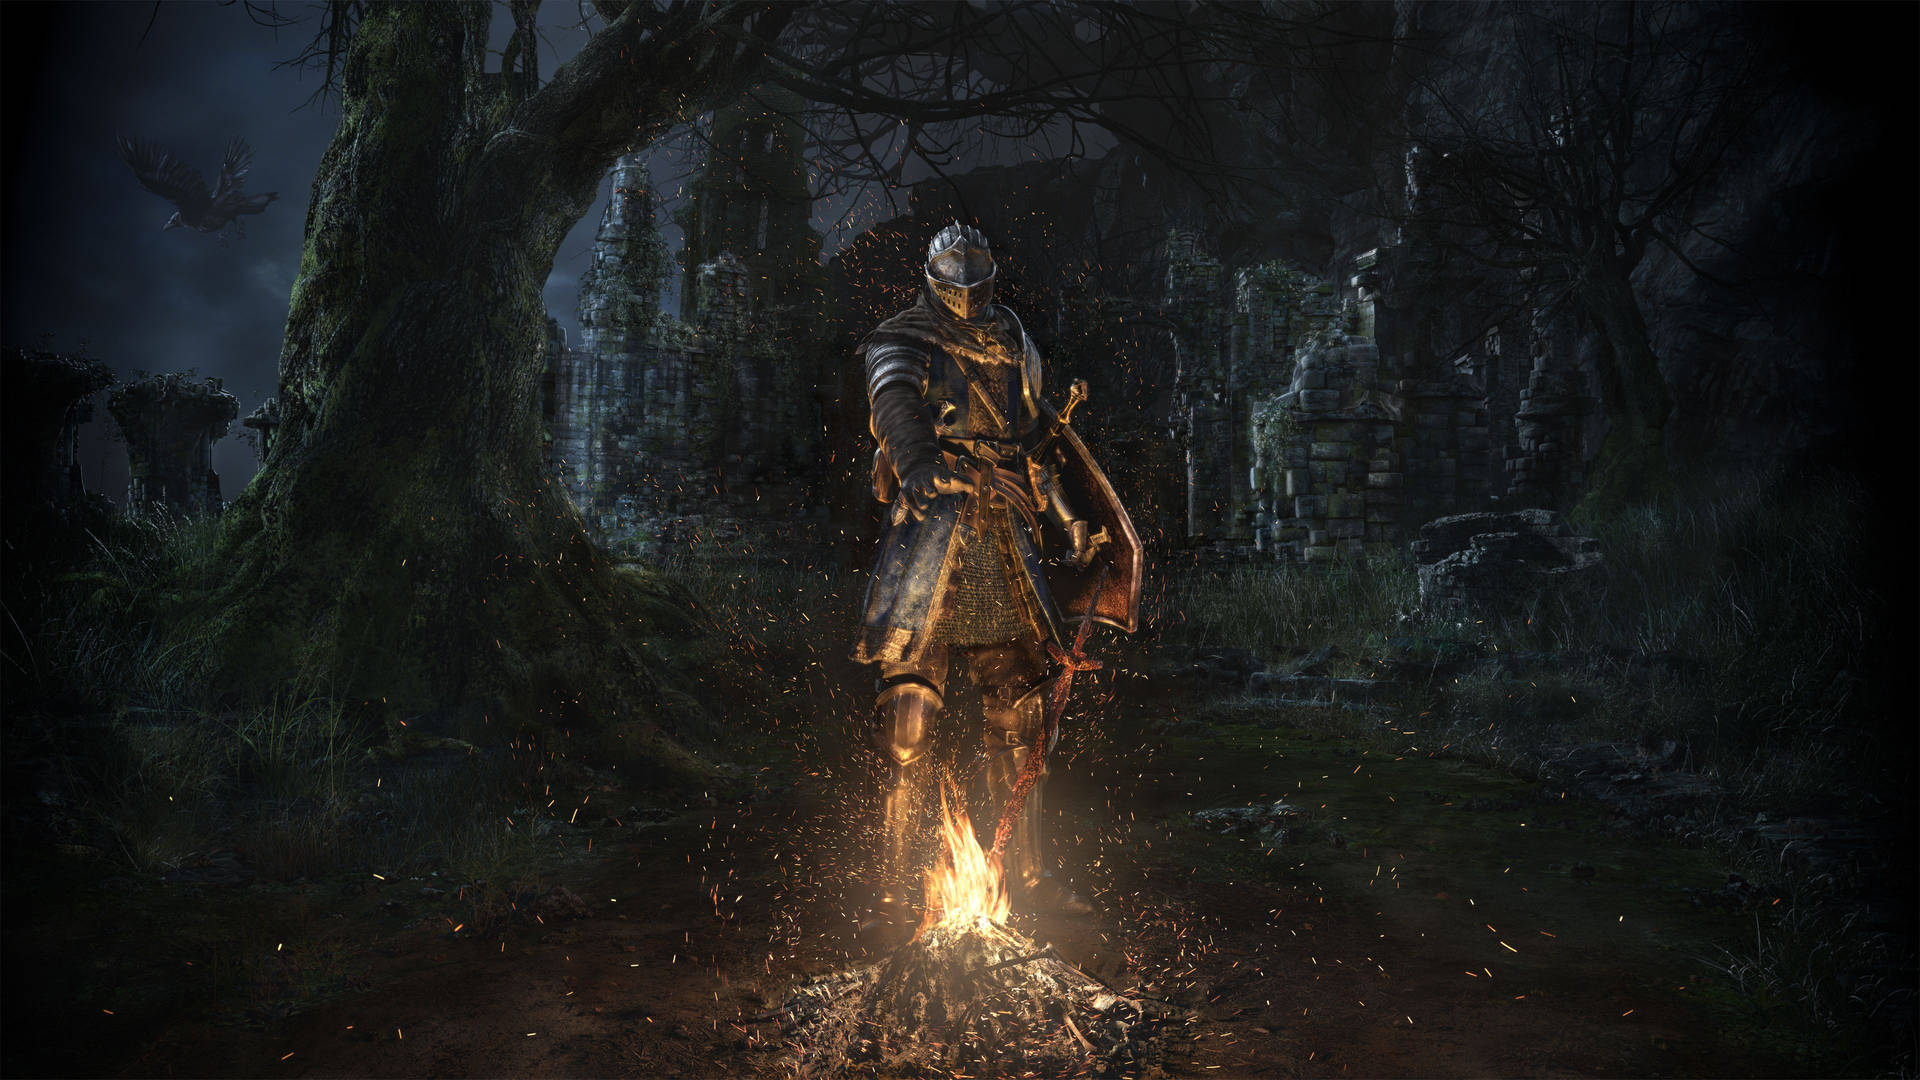 Paving Your Way Through Fire: a Dark Souls Adventure Wallpaper